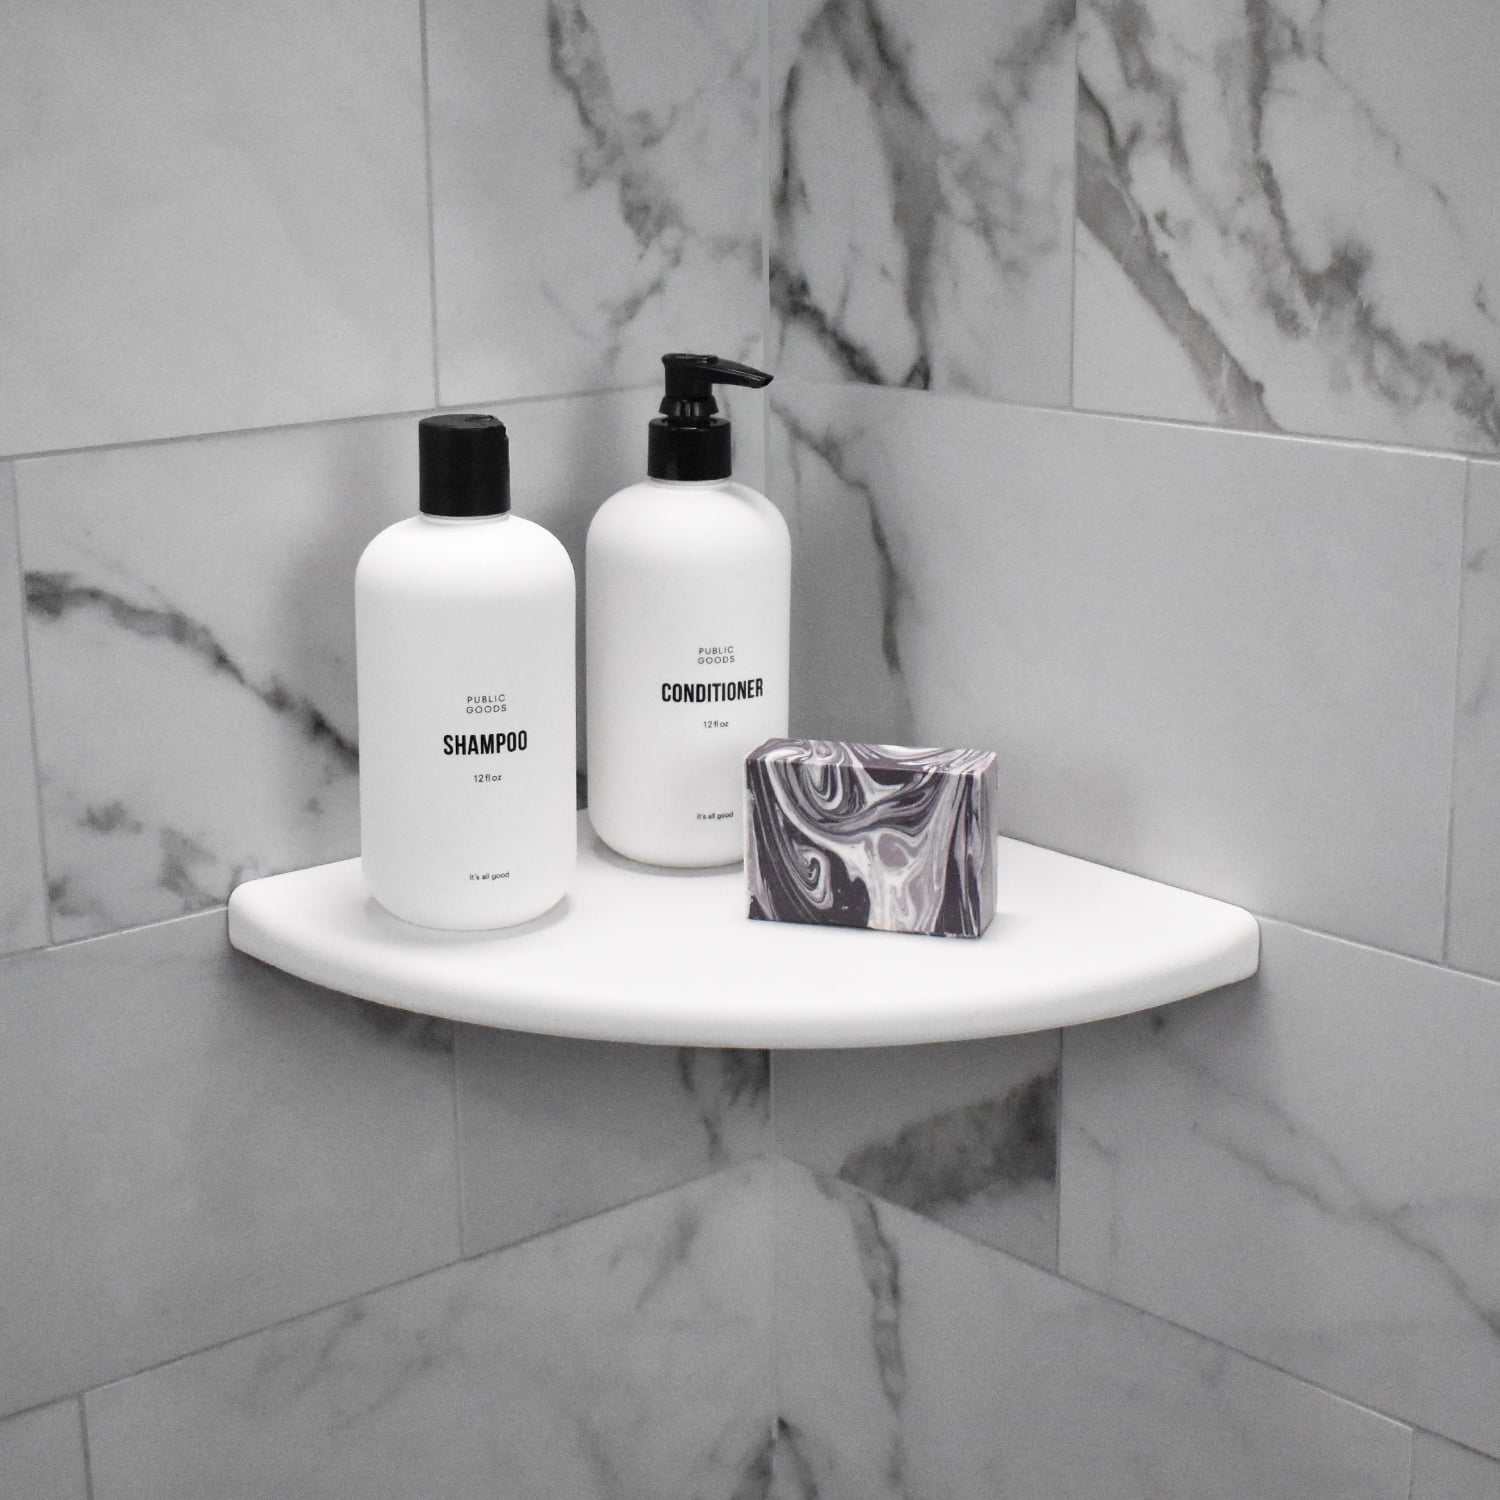 Questech Decor Shower Soap Dish, Retrofit Corner Shower Shelf for Tiled  Shower Walls, Bathroom Storage, 5 Inch Geo Flatback Shower Caddy, White